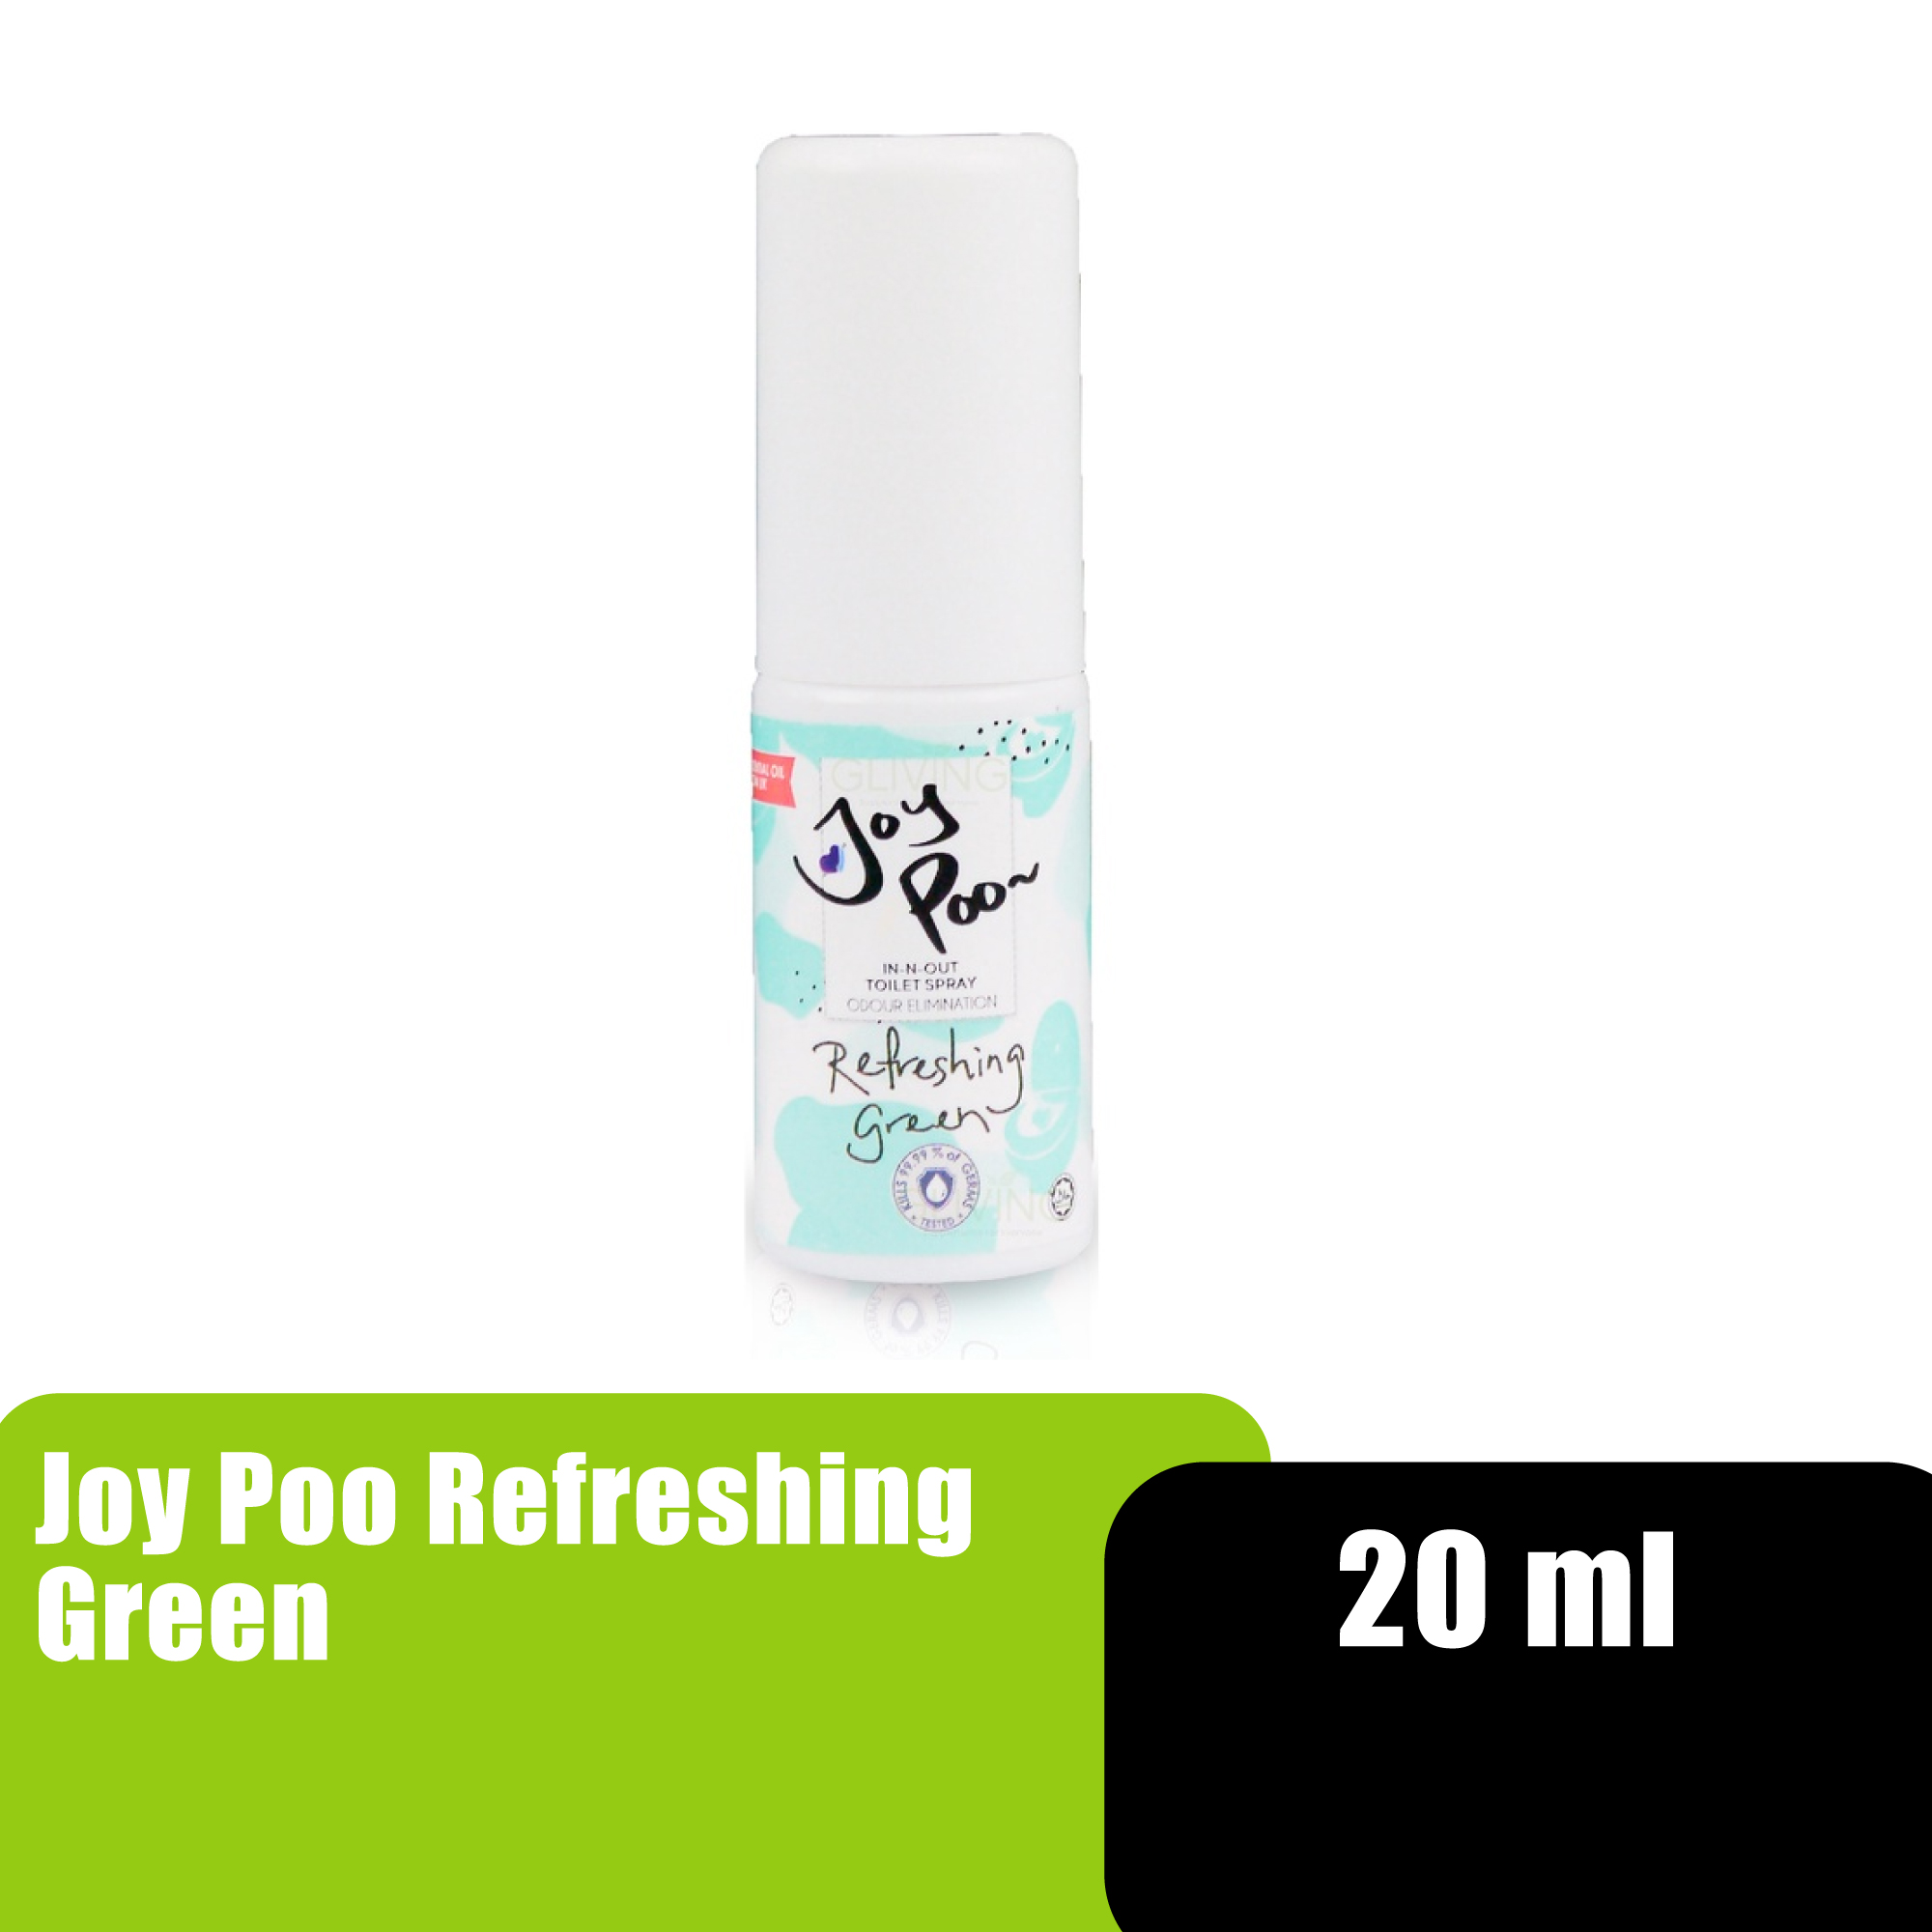 JOY POO 20ML - REFRESHING GREEN